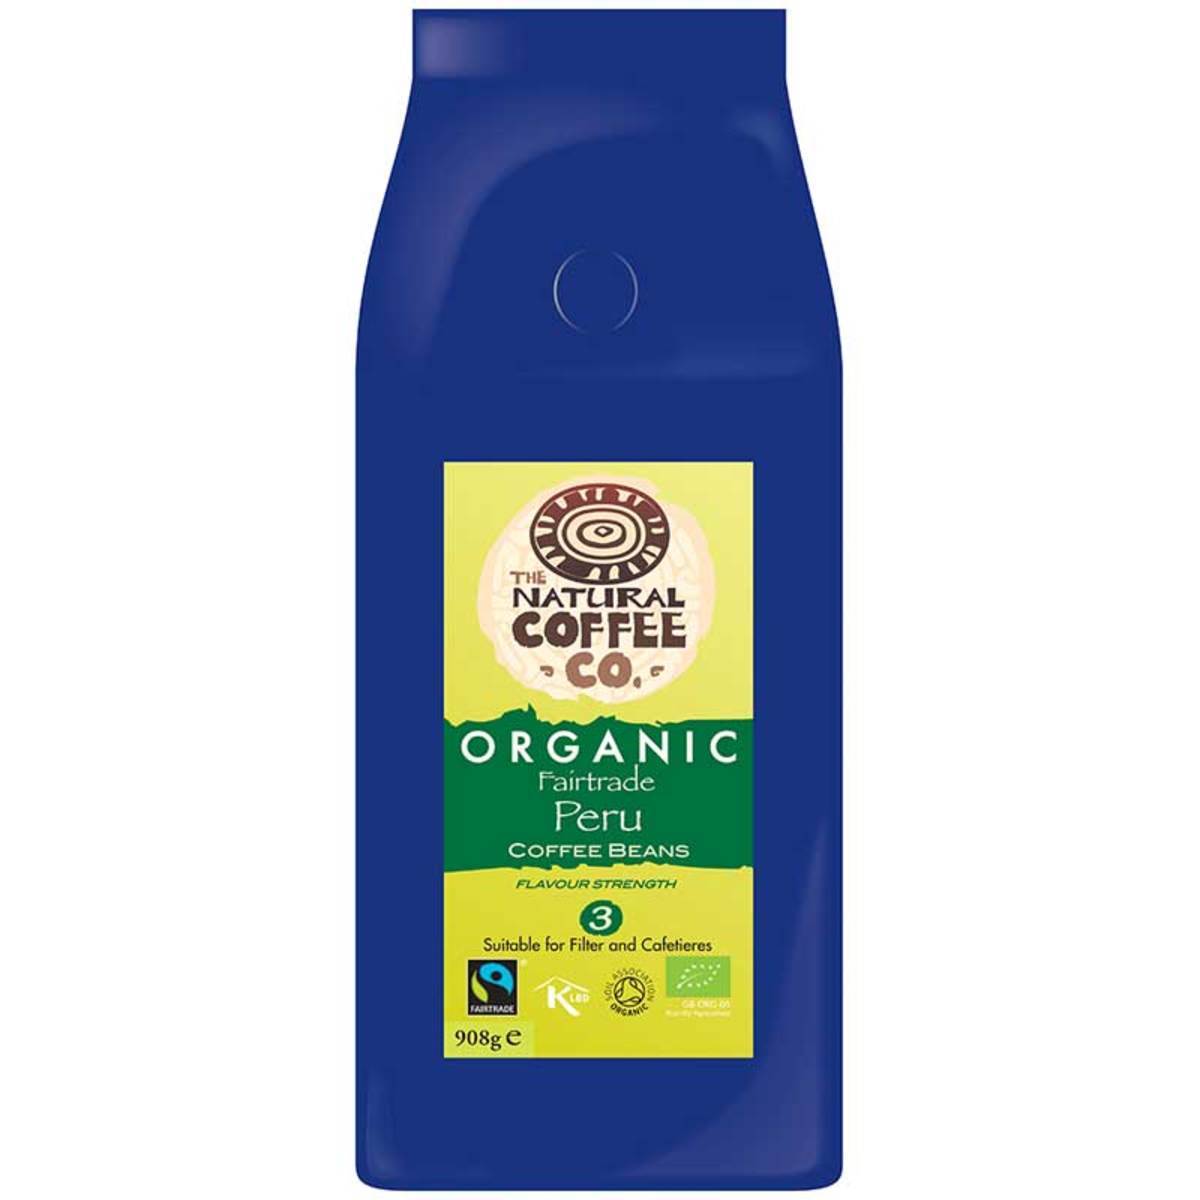 The Natural Coffee Co. Organic Peruvian Coffee, 908g